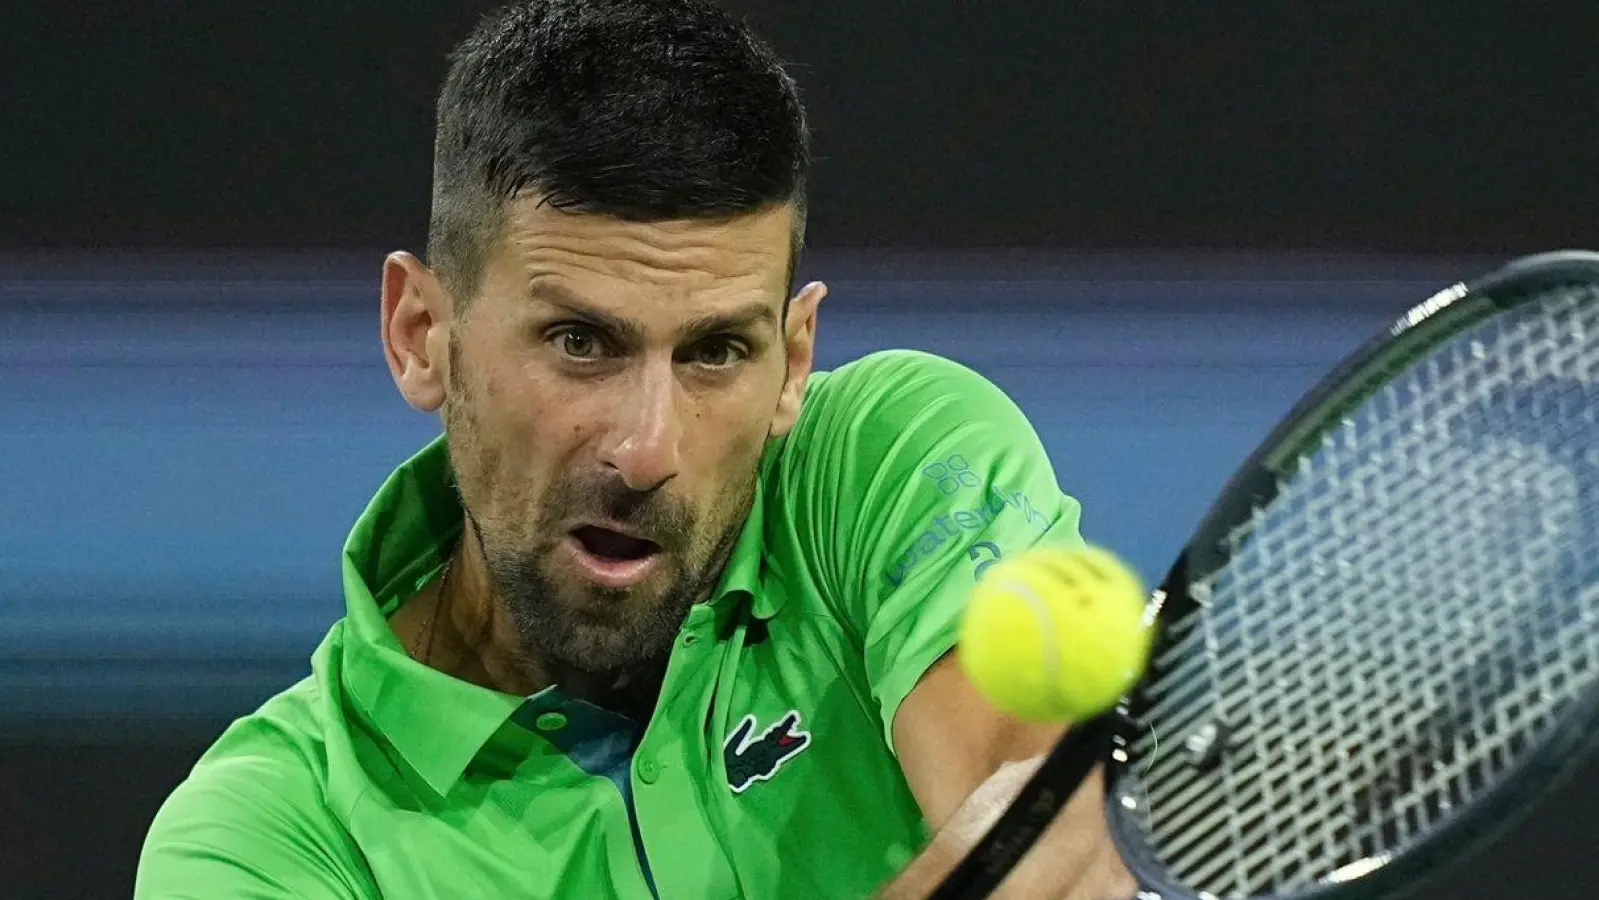 Schied in Indian Wells überraschend schon aus: Novak Djokovic. (Foto: Mark J. Terrill/AP/dpa)